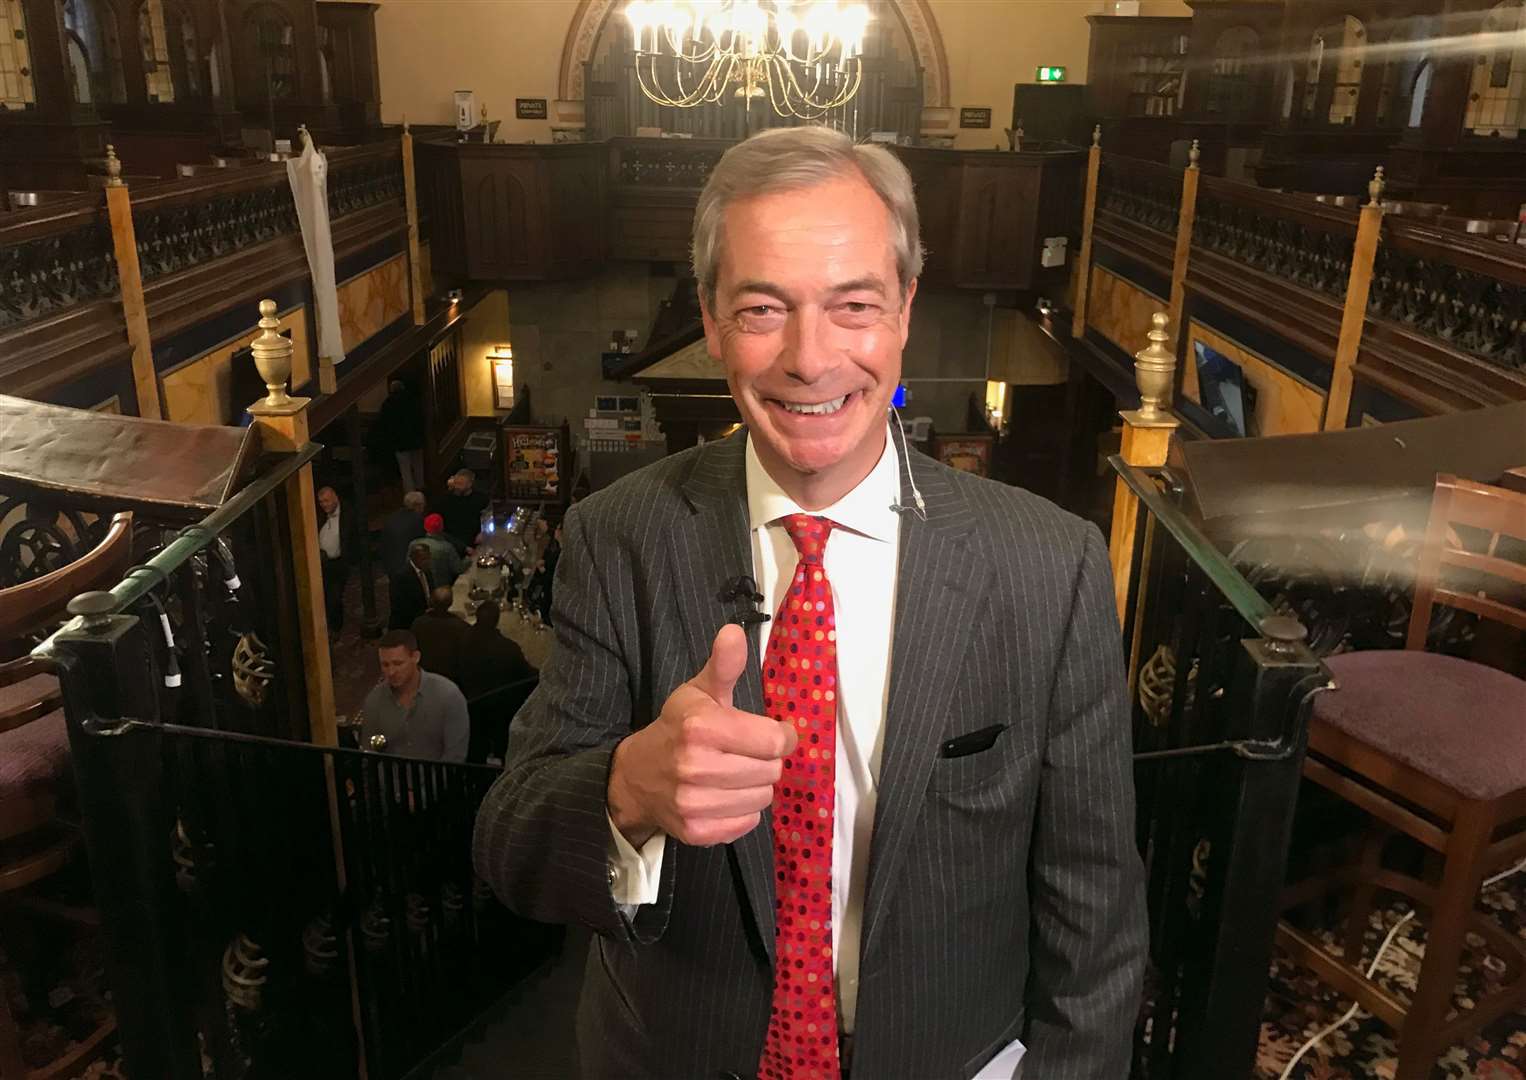 Nigel Farage was back making headlines